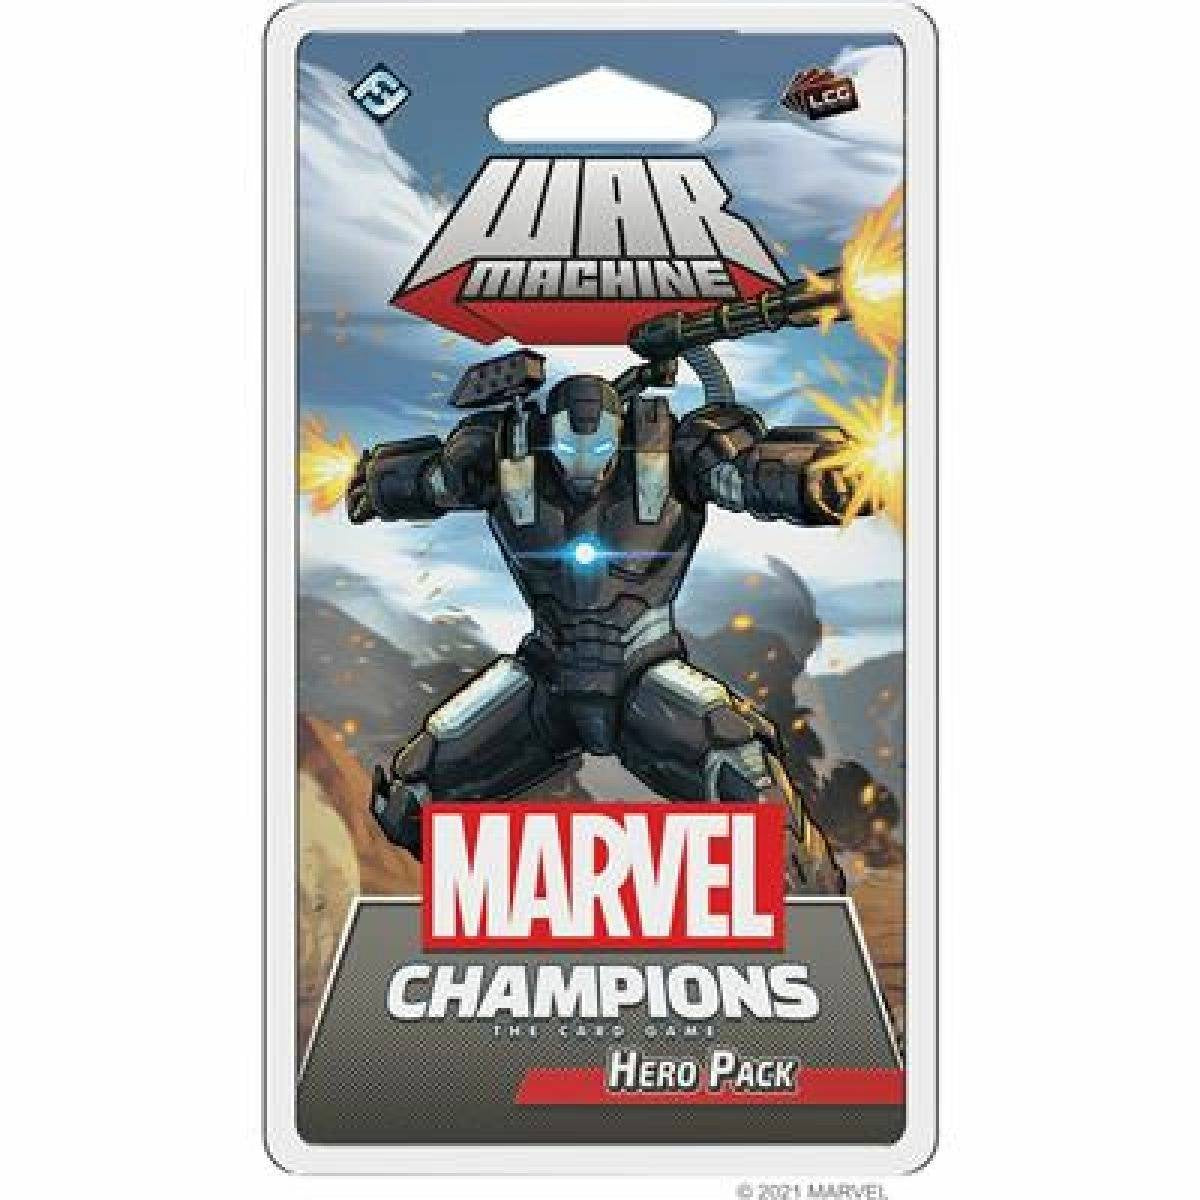 Marvel Champions The Card Game - War Machine Hero Pack